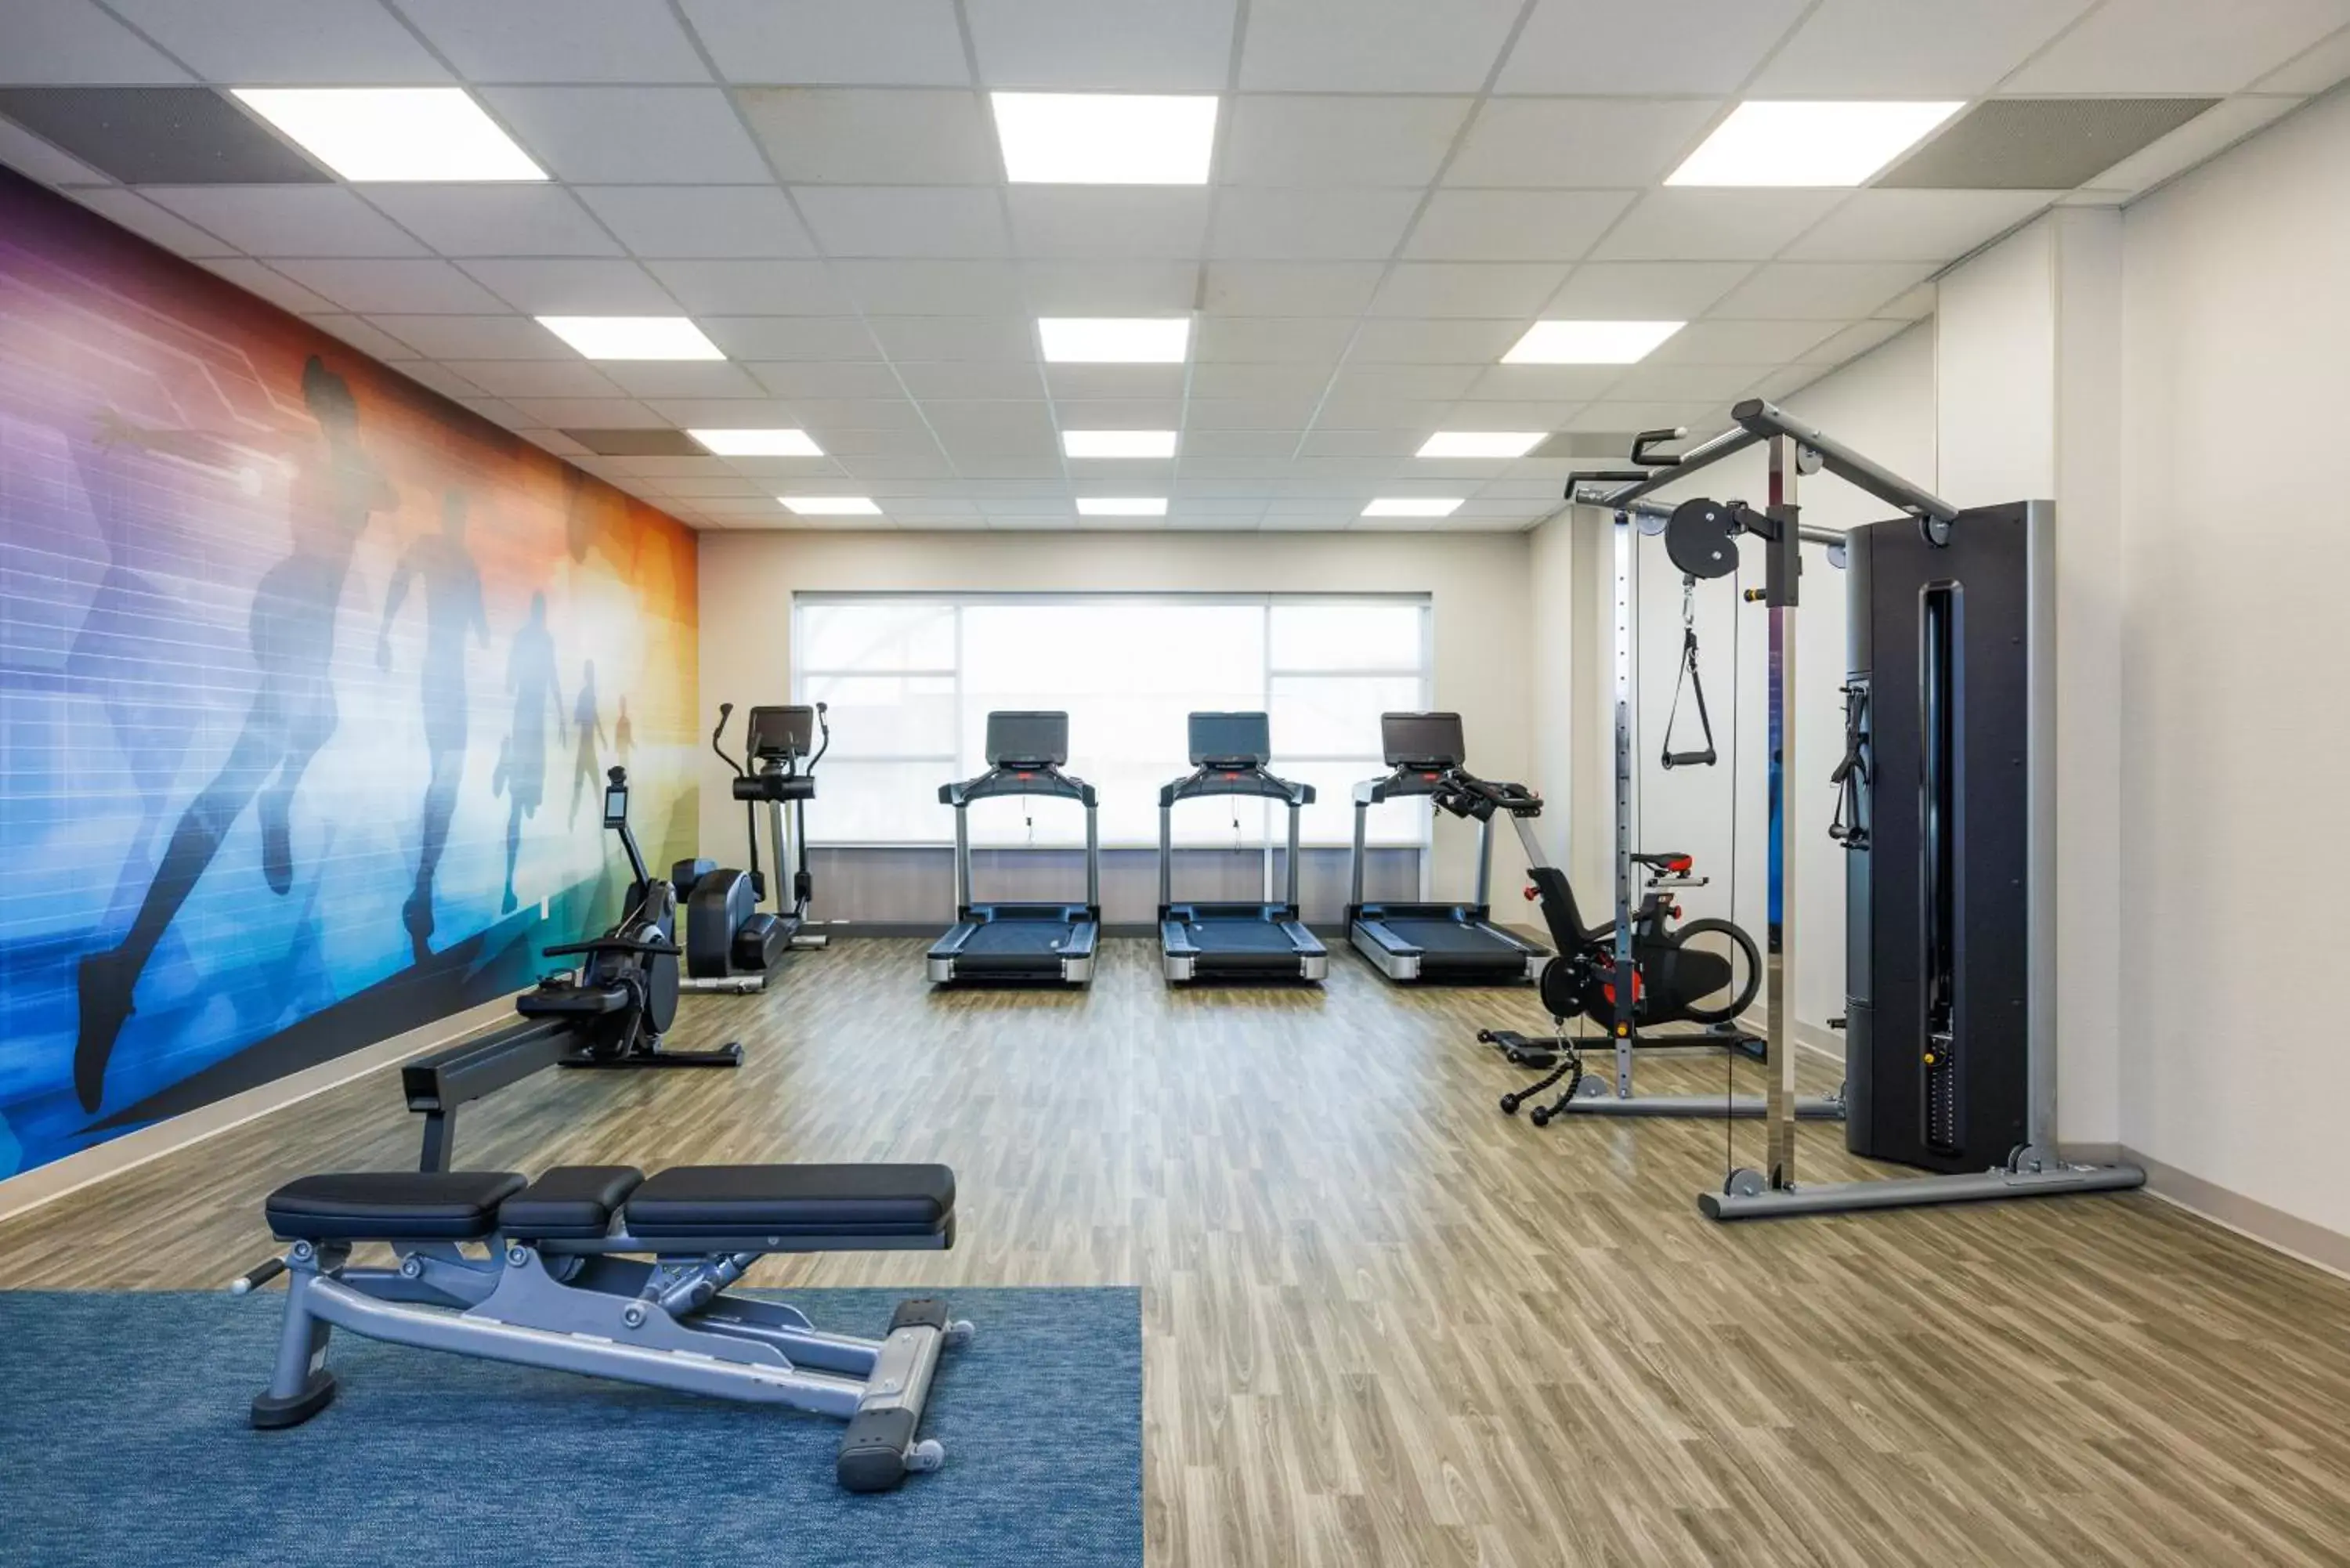 Fitness centre/facilities, Fitness Center/Facilities in Hyatt Place San Carlos